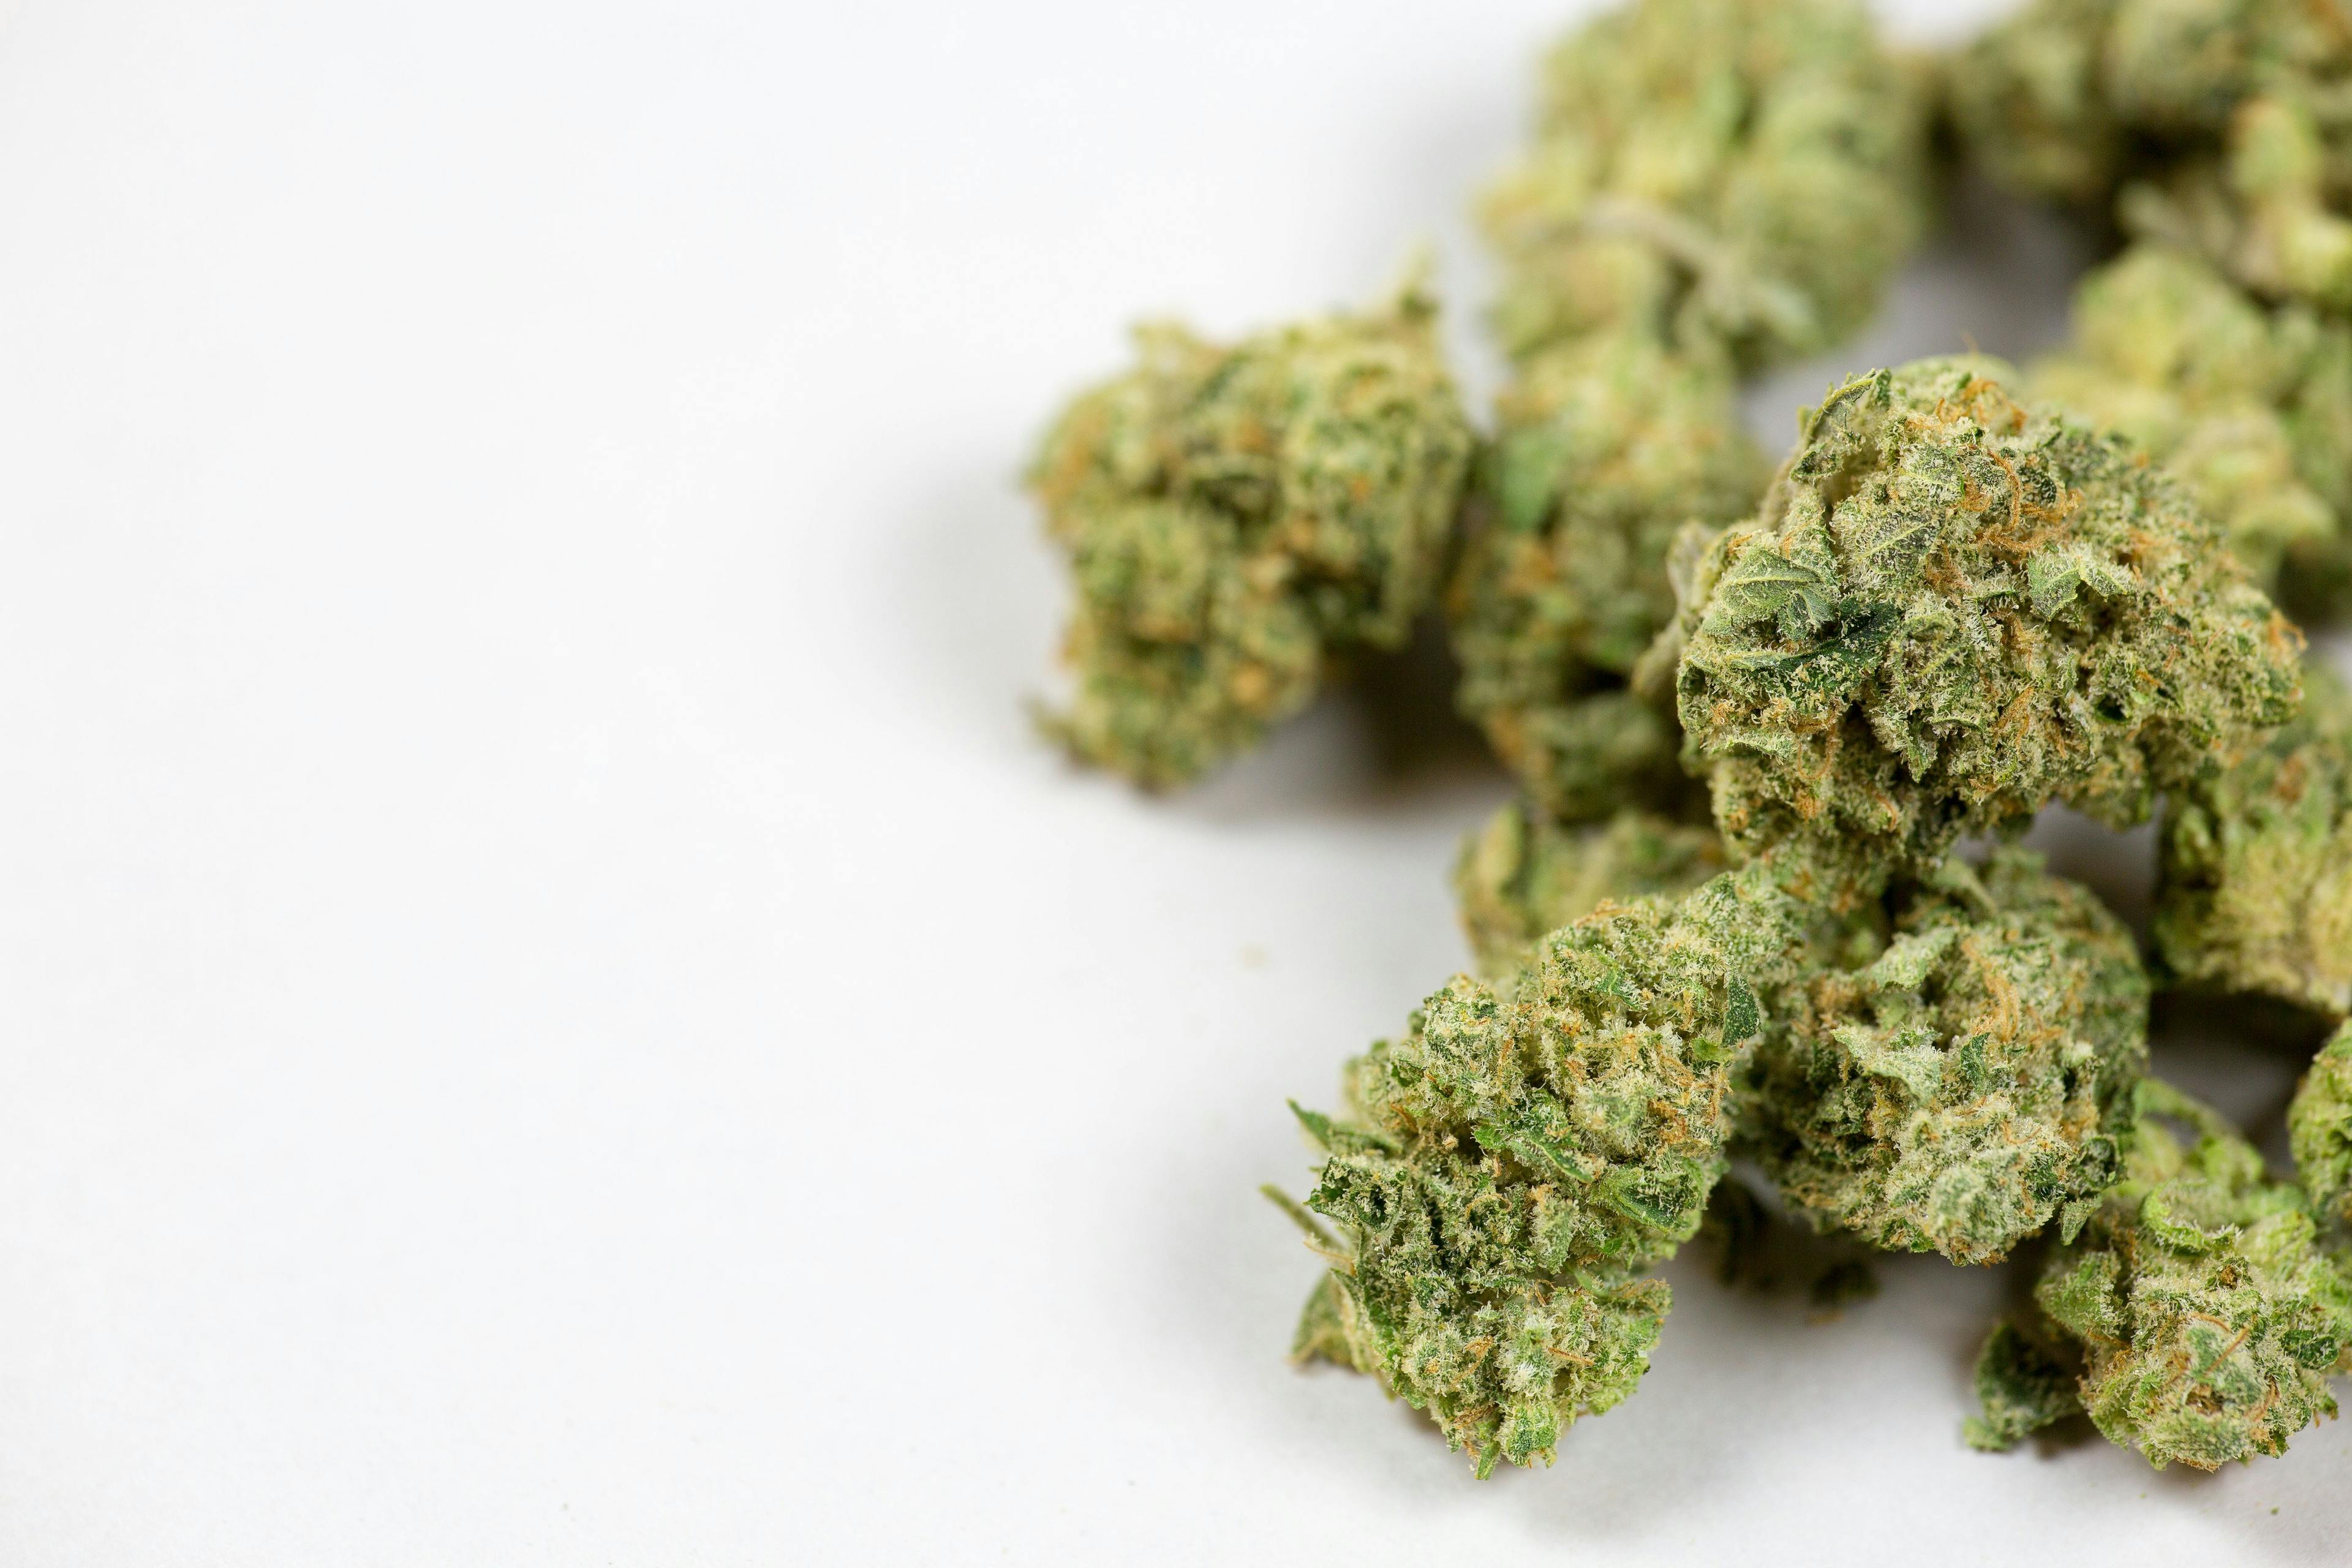 Close up of marijuana bud on white background - Image credit: Pattersonic | stock.adobe.com